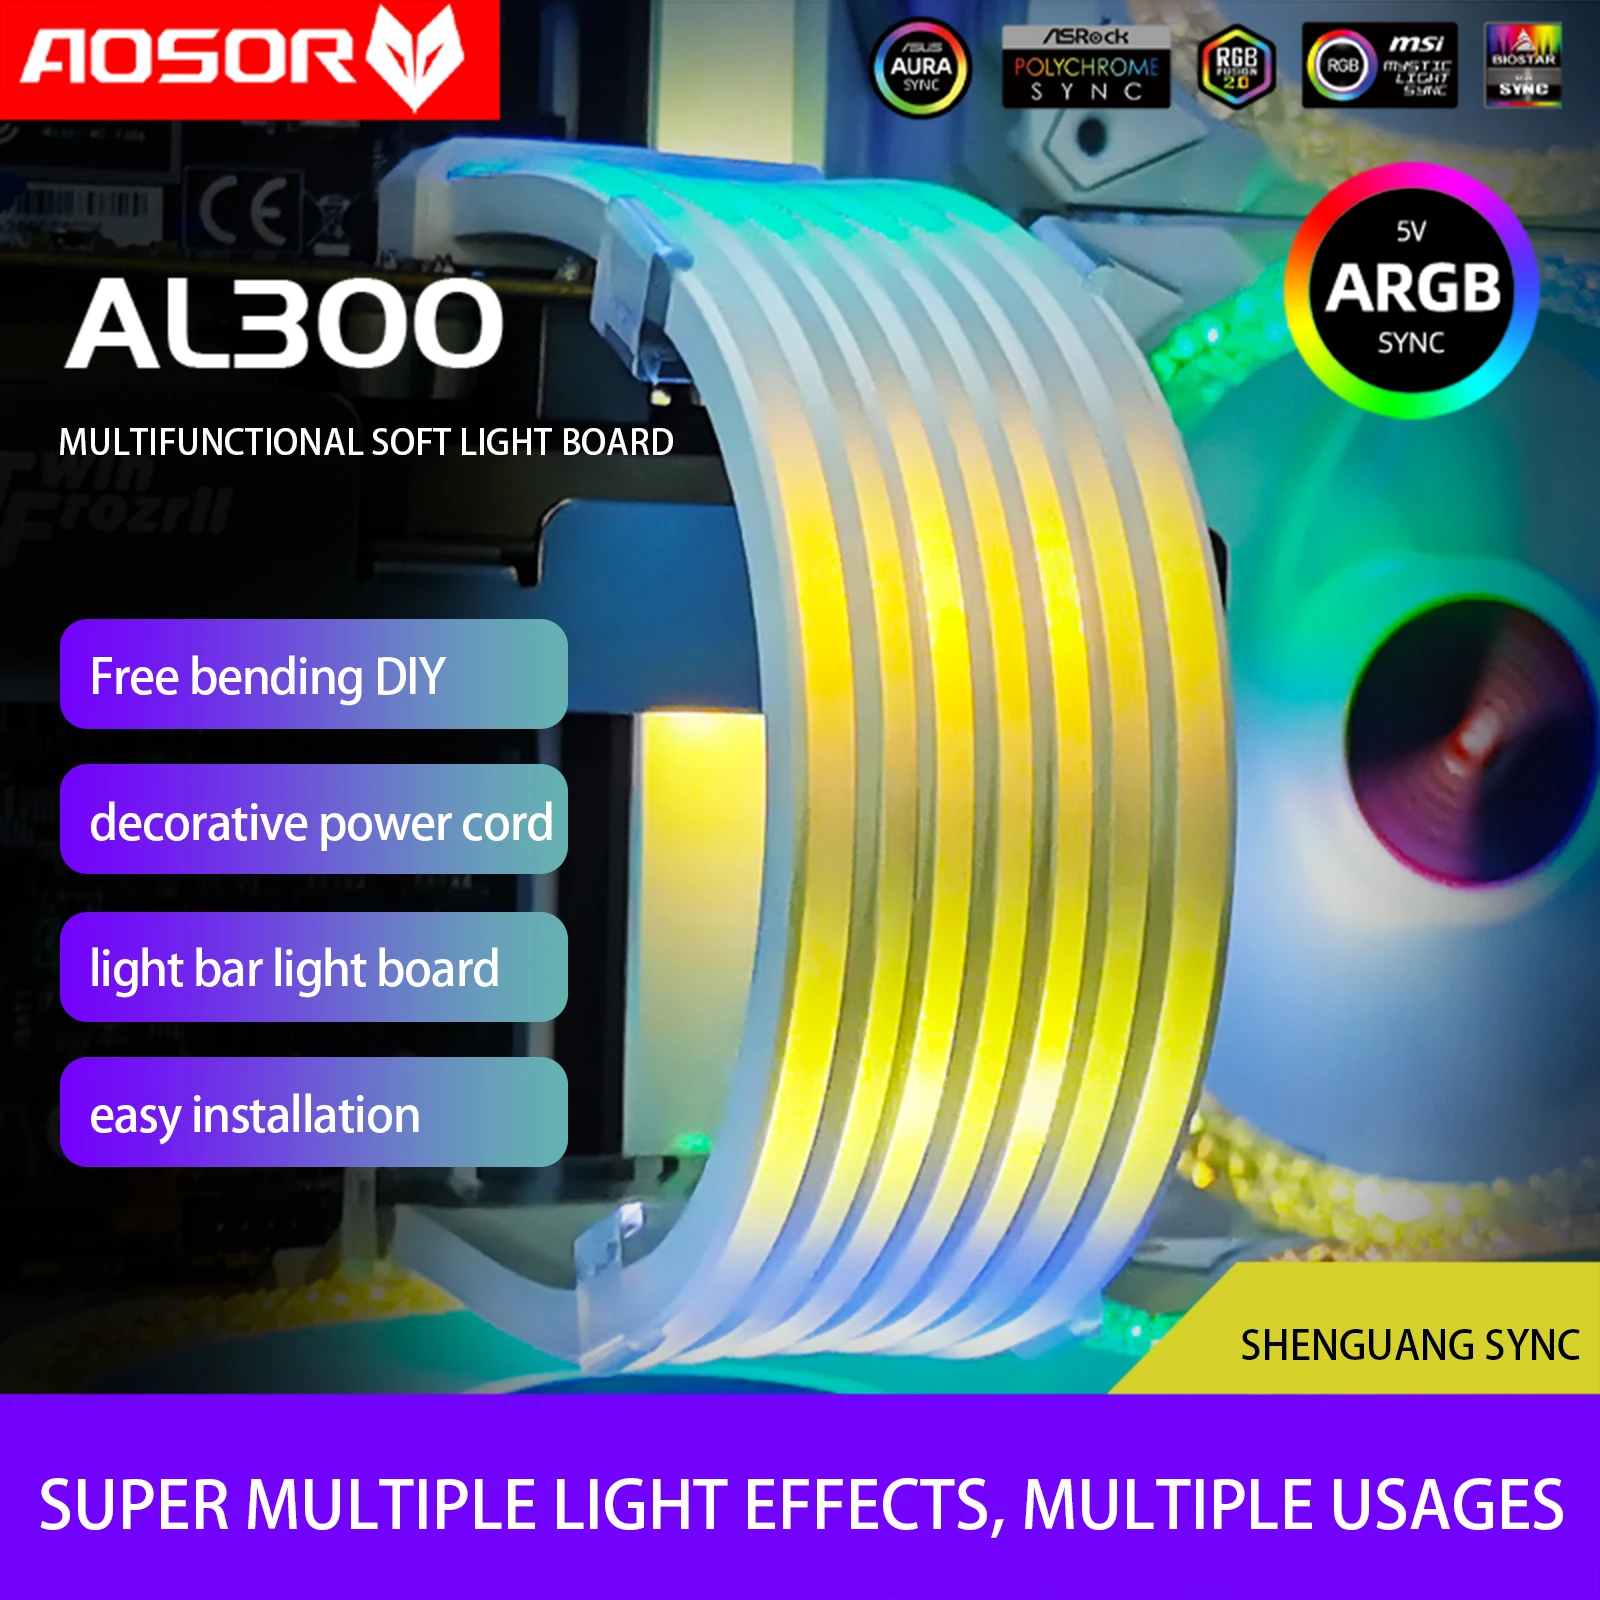 

COOLMOON AOSOR Flexible Light Bar PC Backlight Flexible Lamp Strip 5V ARGB Aura Sync Flexible LED Light Bendable DIY for Chassis